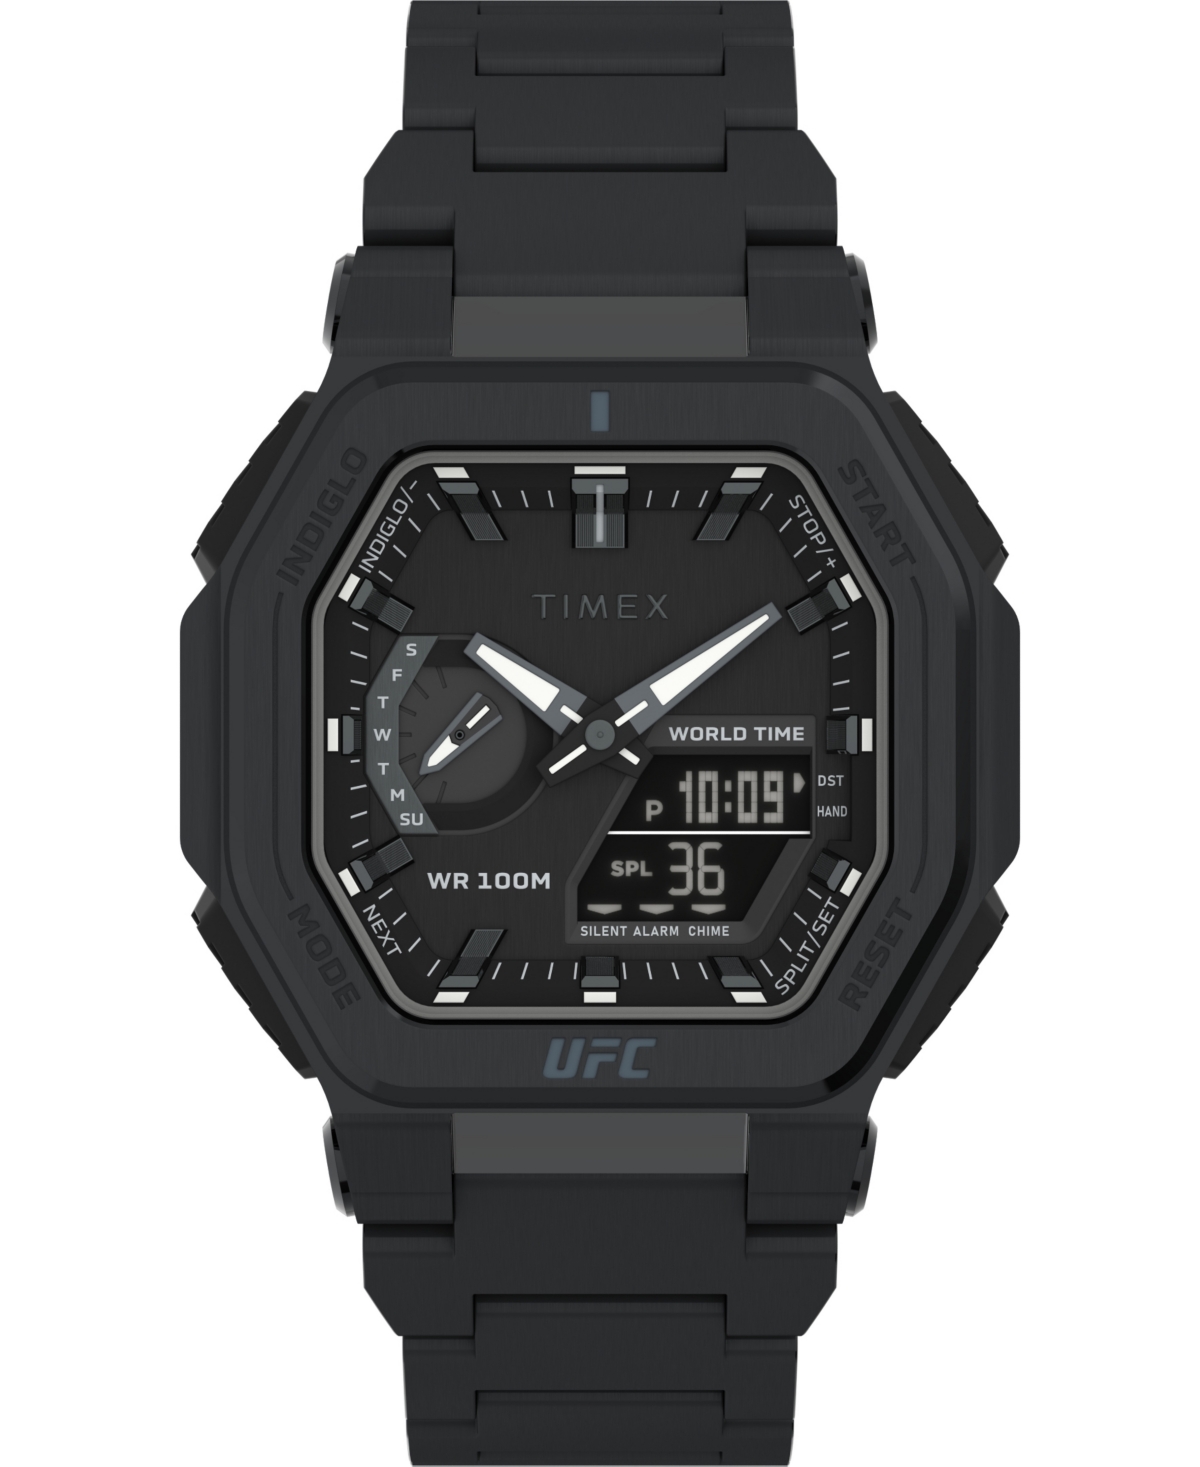 Ufc Men's Colossus Analog-Digital Black Stainless Steel Watch, 45mm - Black